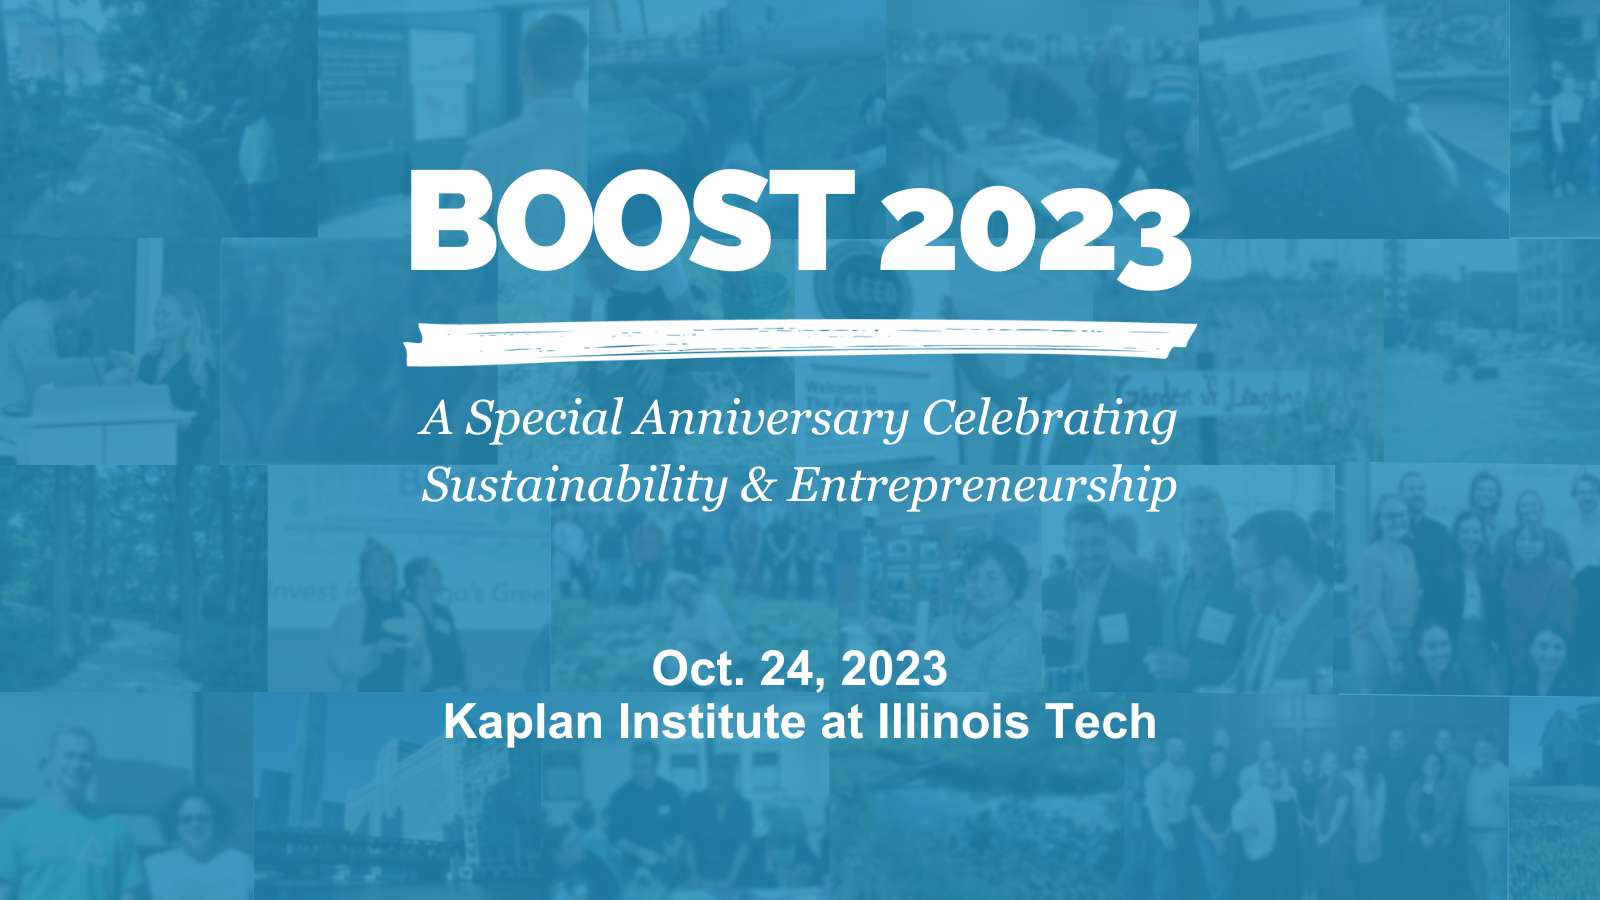 BOOST 2023: A Special Anniversary Celebrating Sustainability & Entrepreneurship